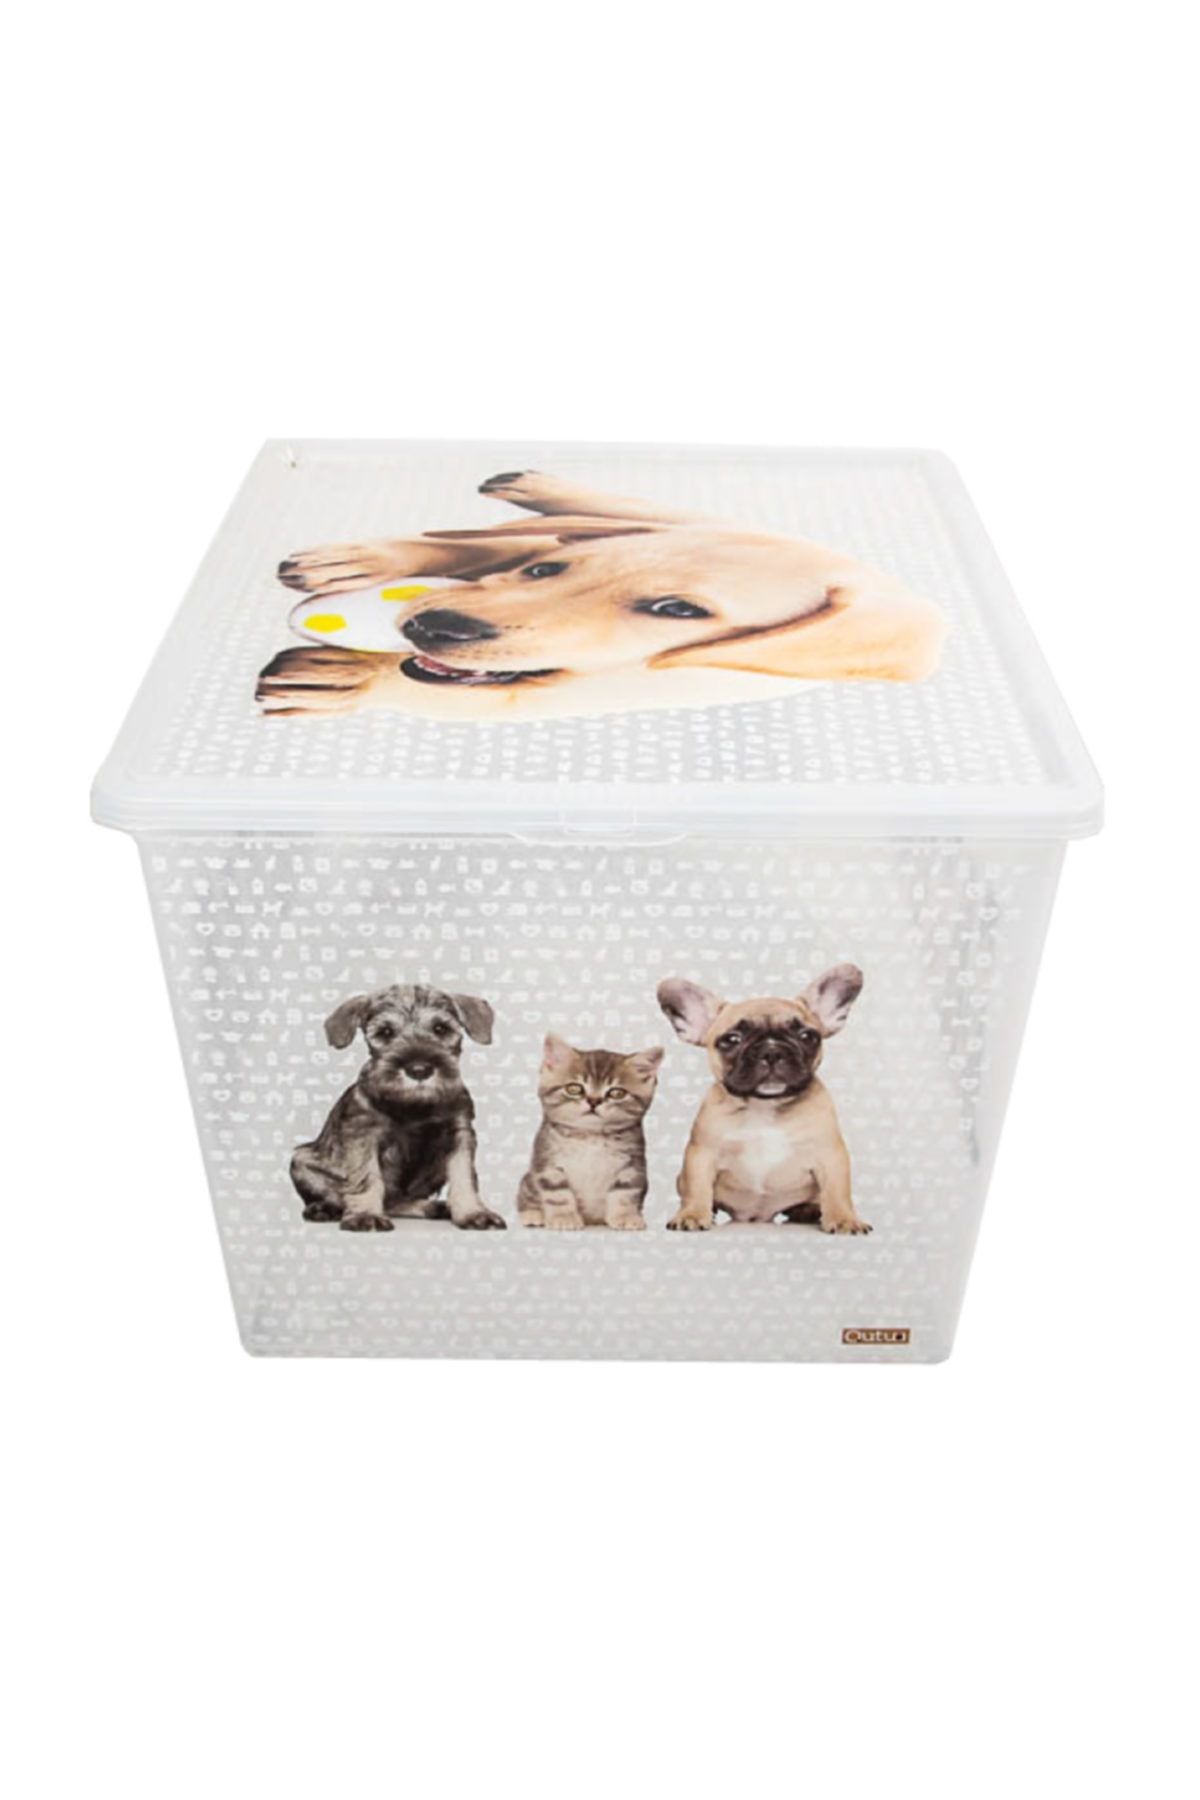 QUTU Light Box Cats And Dogs Şeffaf Dekoratif Saklama Ve Oyuncak Kutusu- 50 Litre